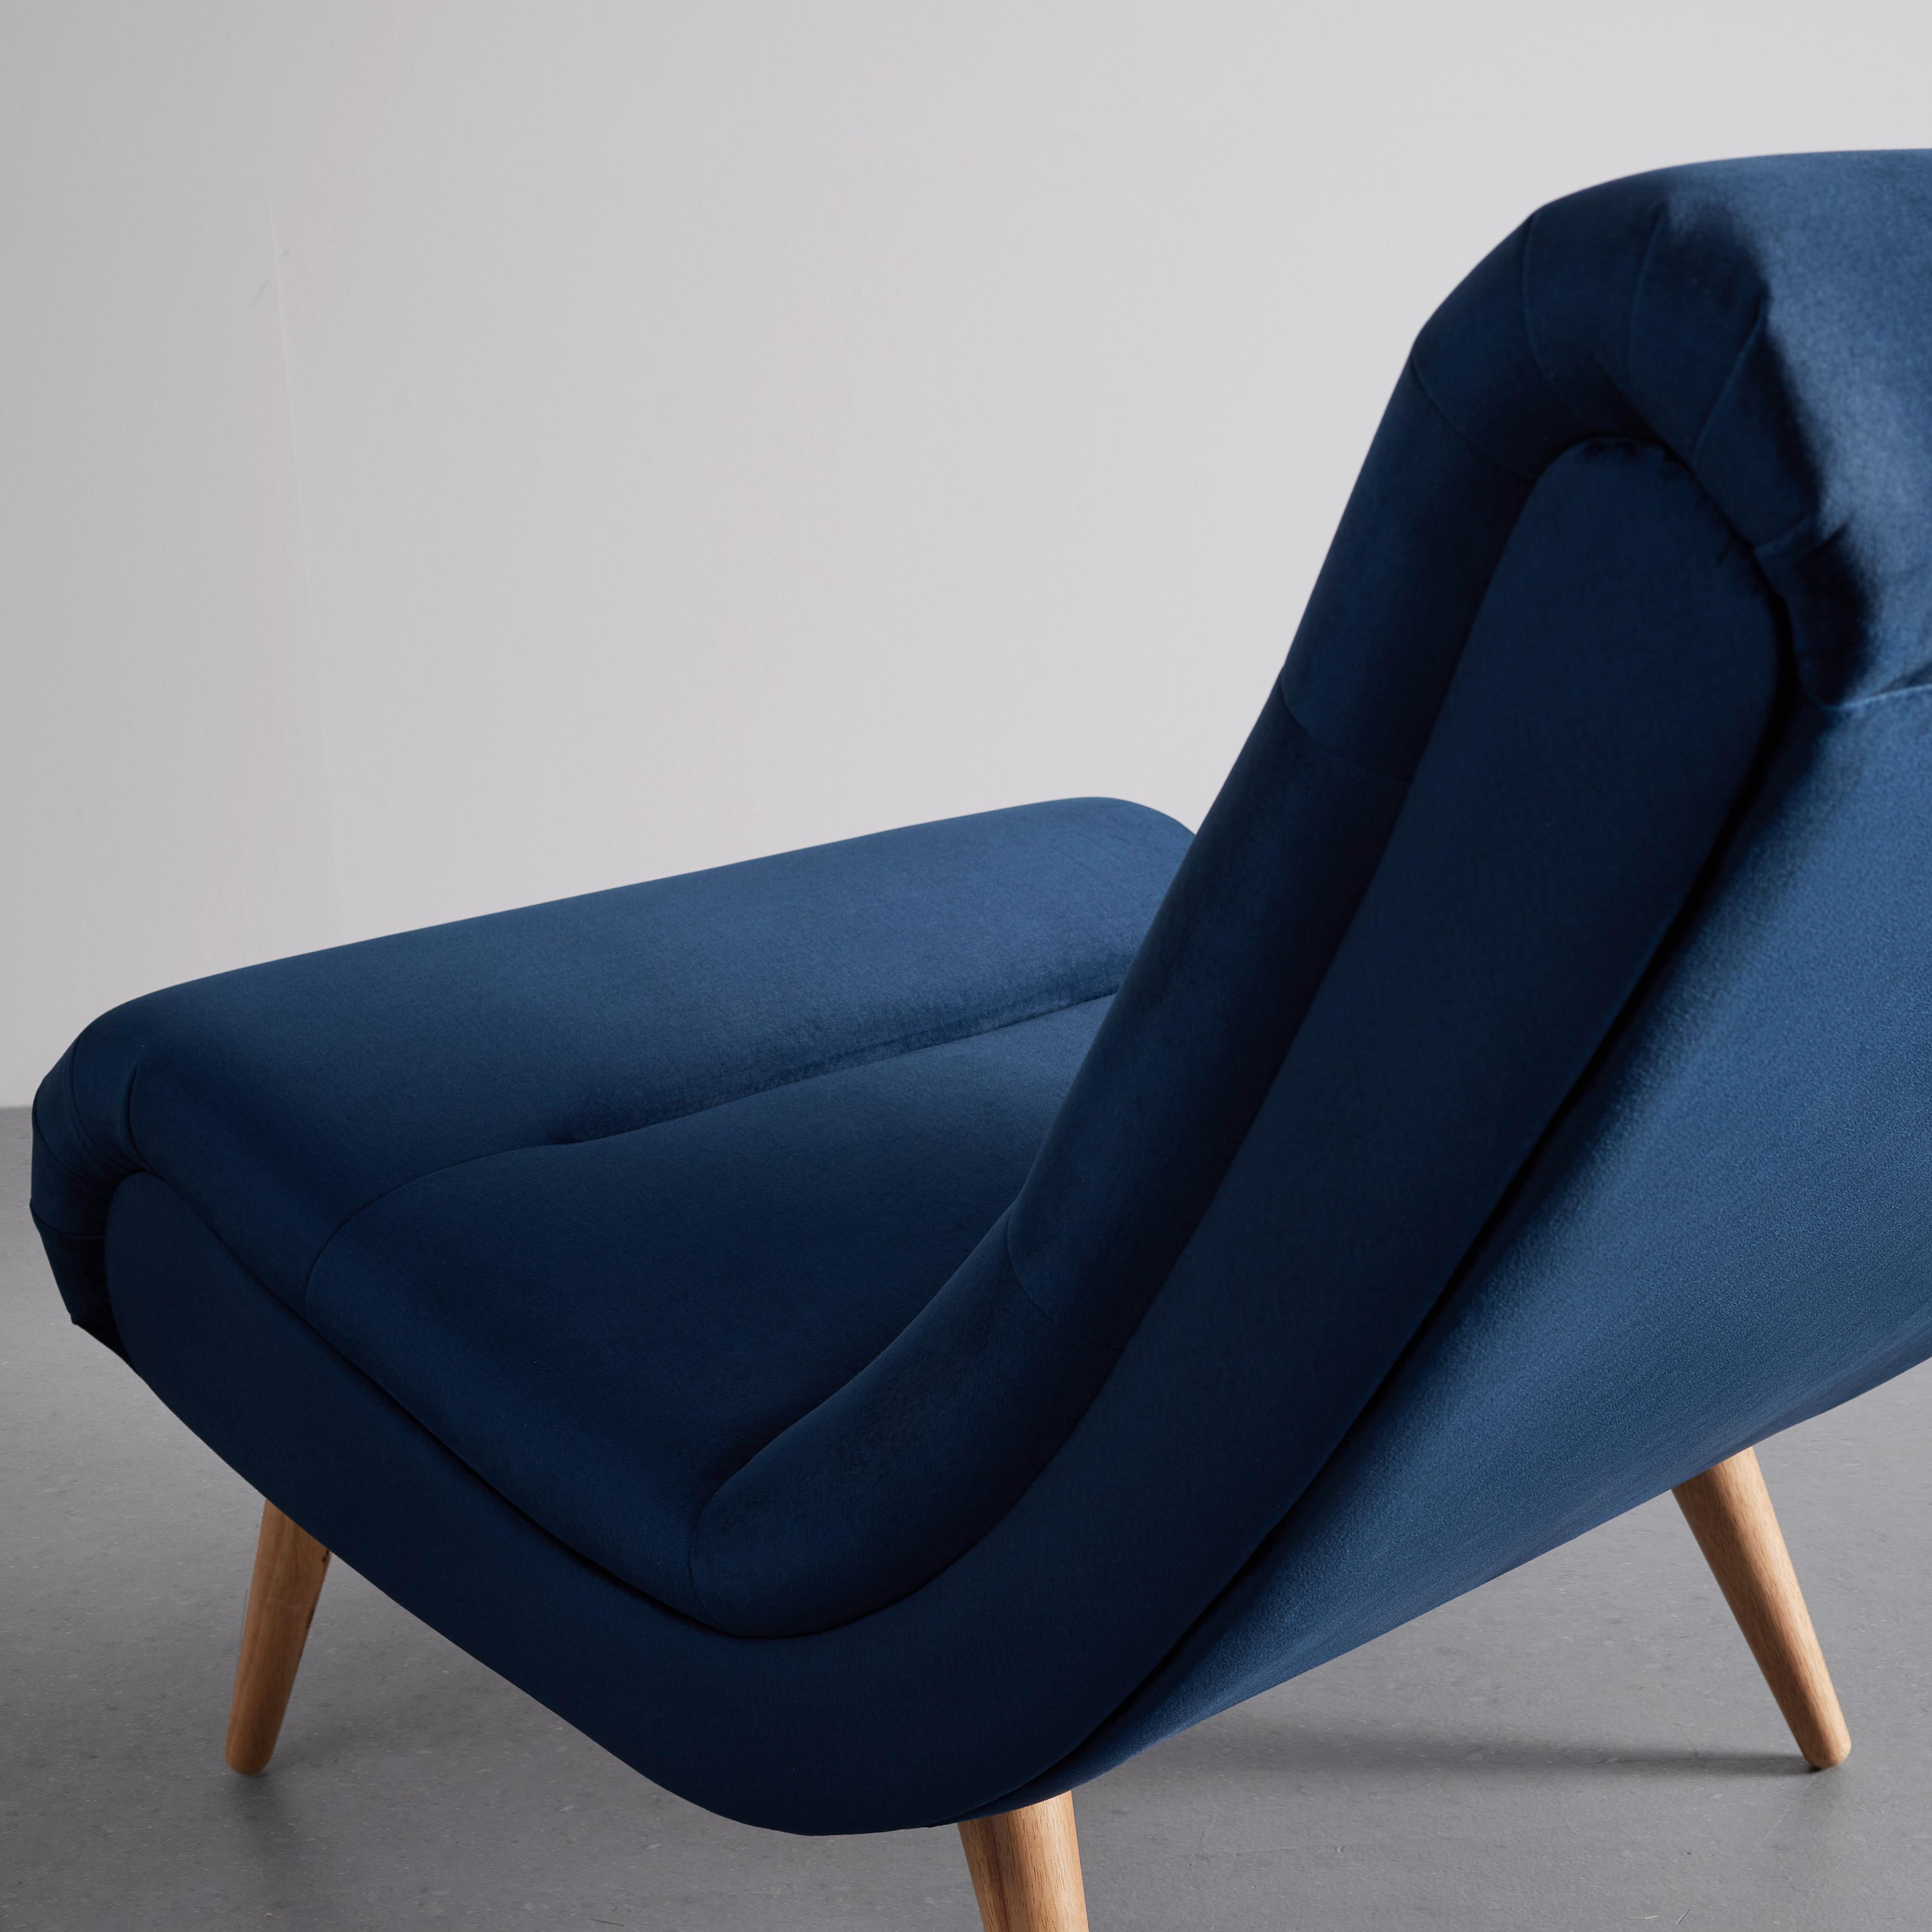 Relaxsessel blau, "Jan", Samt - Blau/Naturfarben, MODERN, Holz/Textil (74/102/90cm) - Bessagi Home